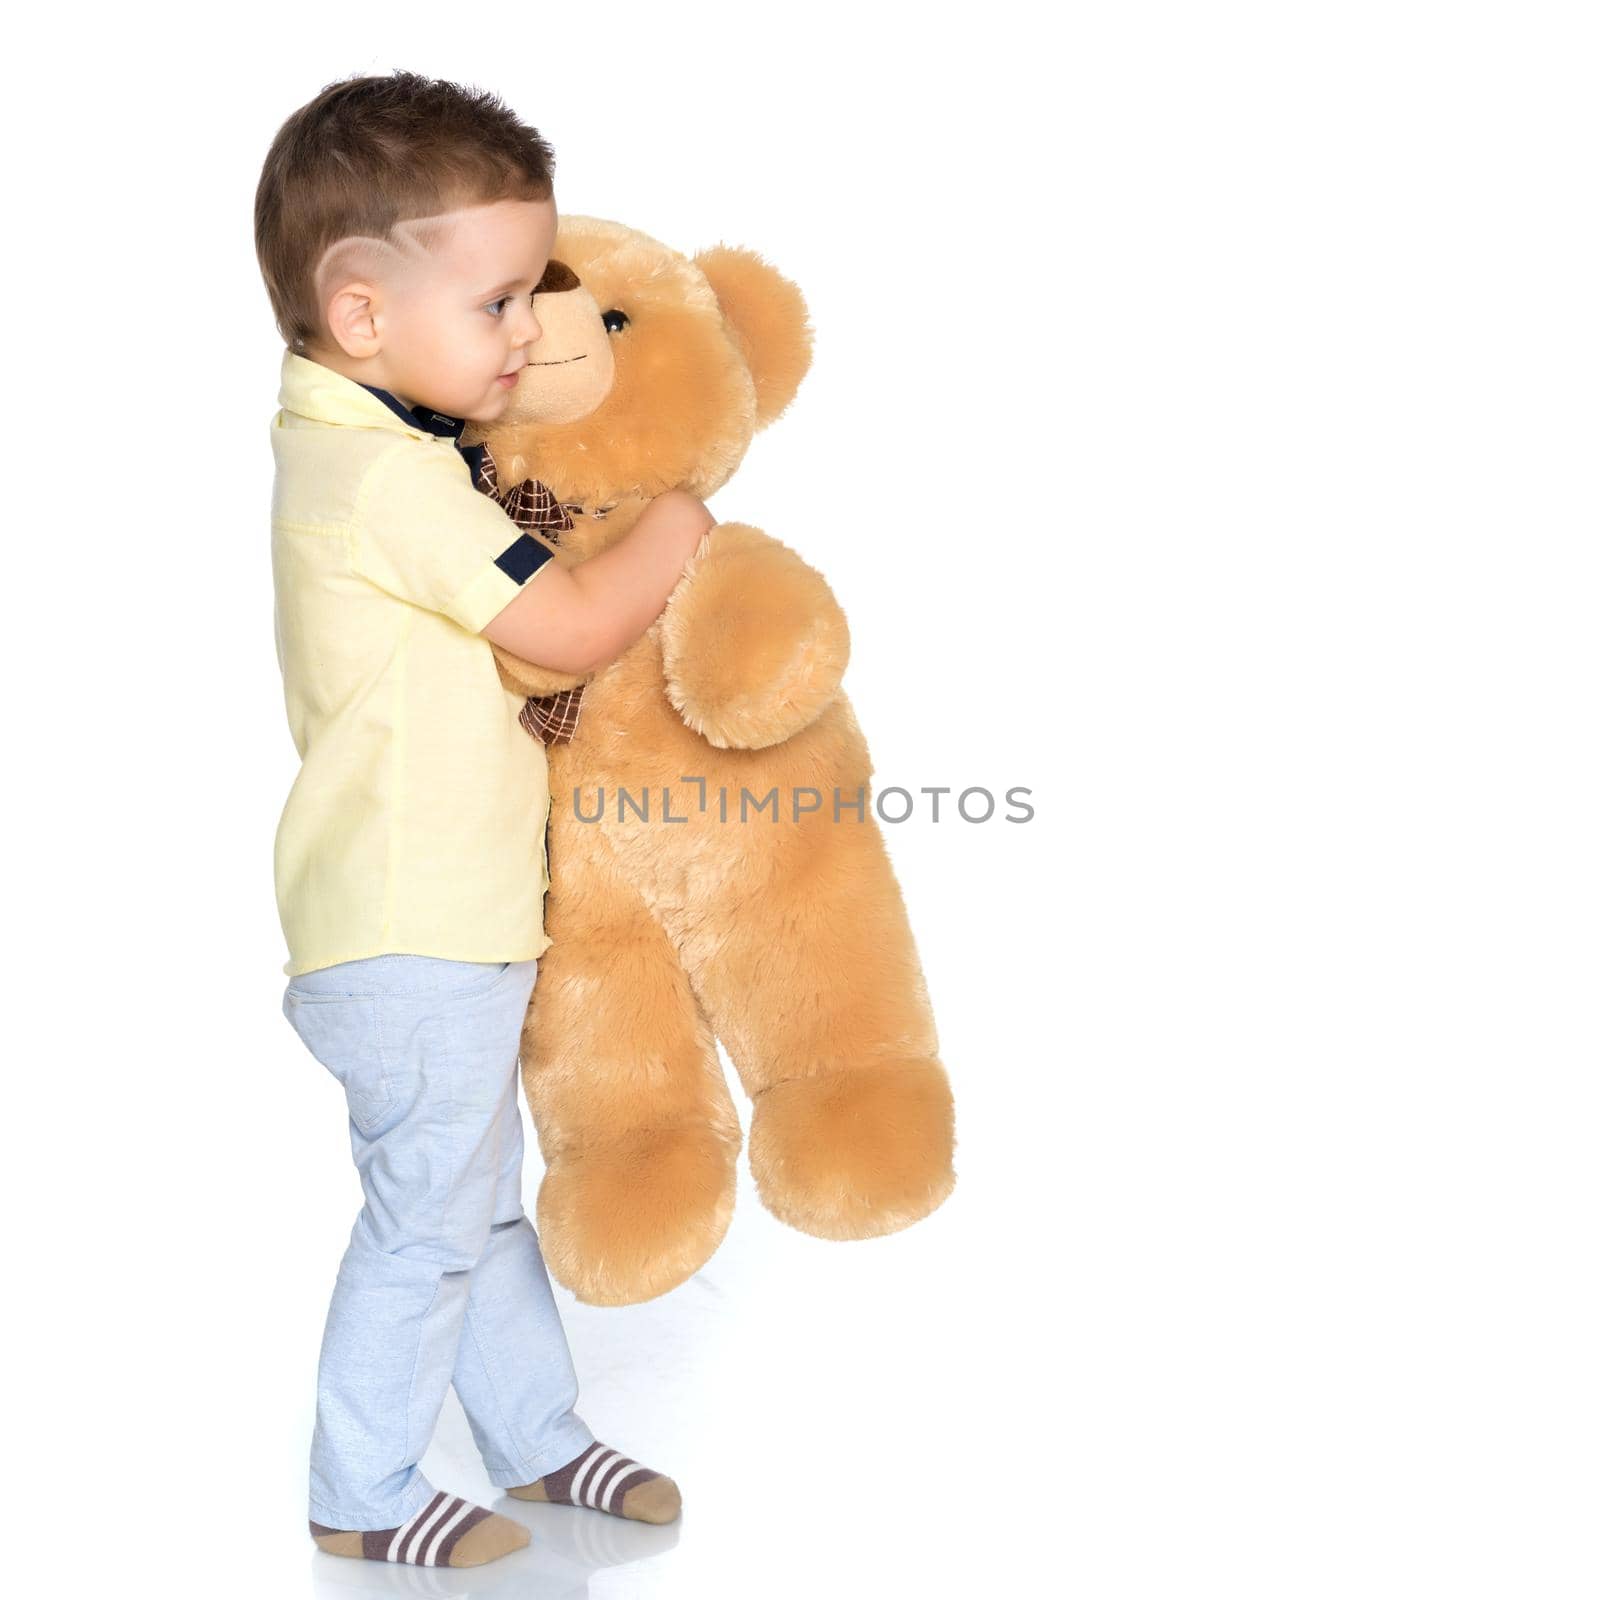 Little boy playing with teddy bear by kolesnikov_studio